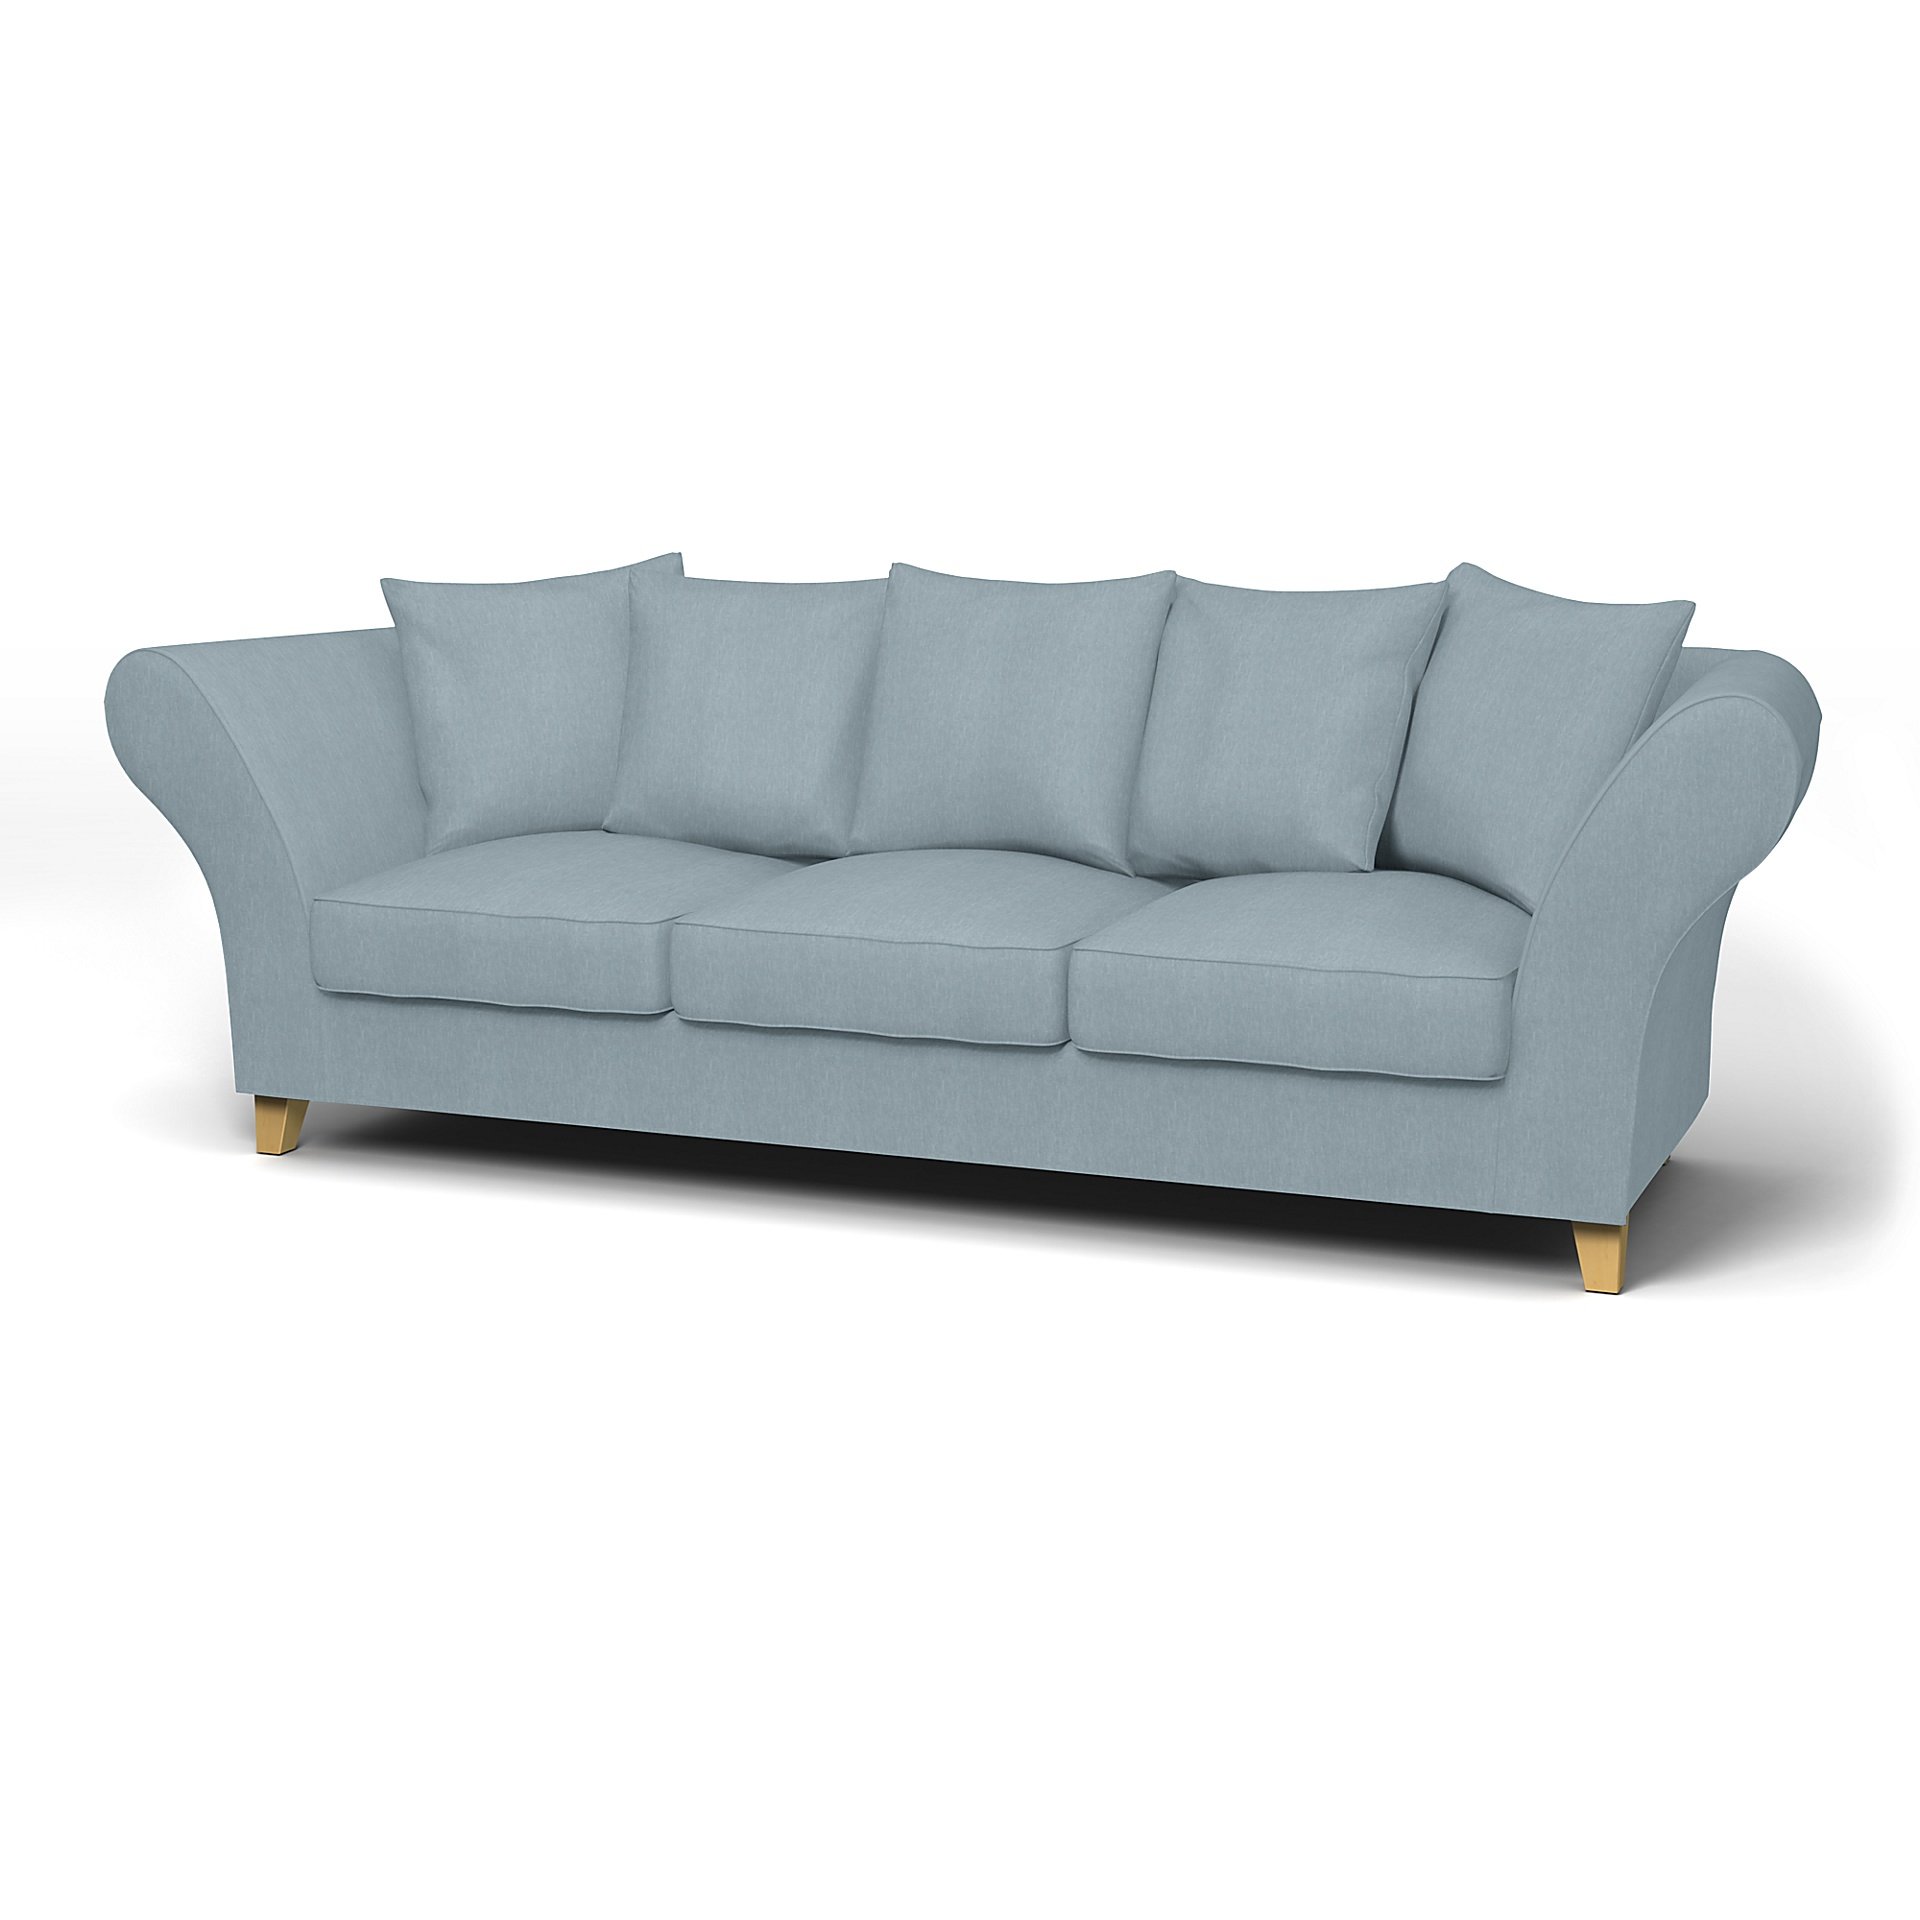 IKEA - Backa 3.5 Seater Sofa Cover, Dusty Blue, Linen - Bemz